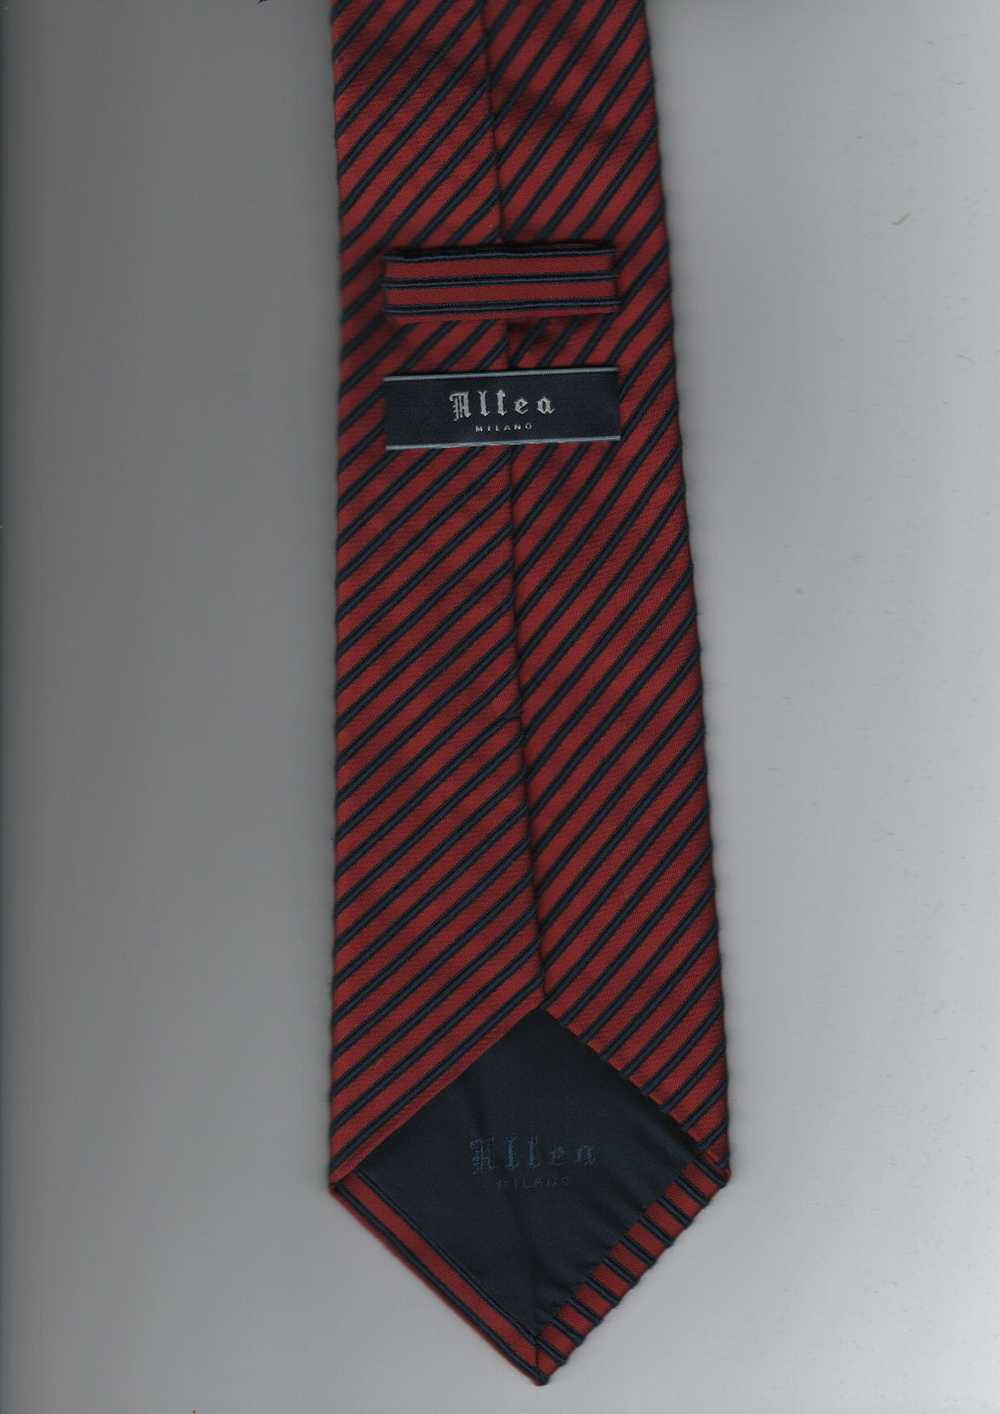 Vintage Altea tie - image 4